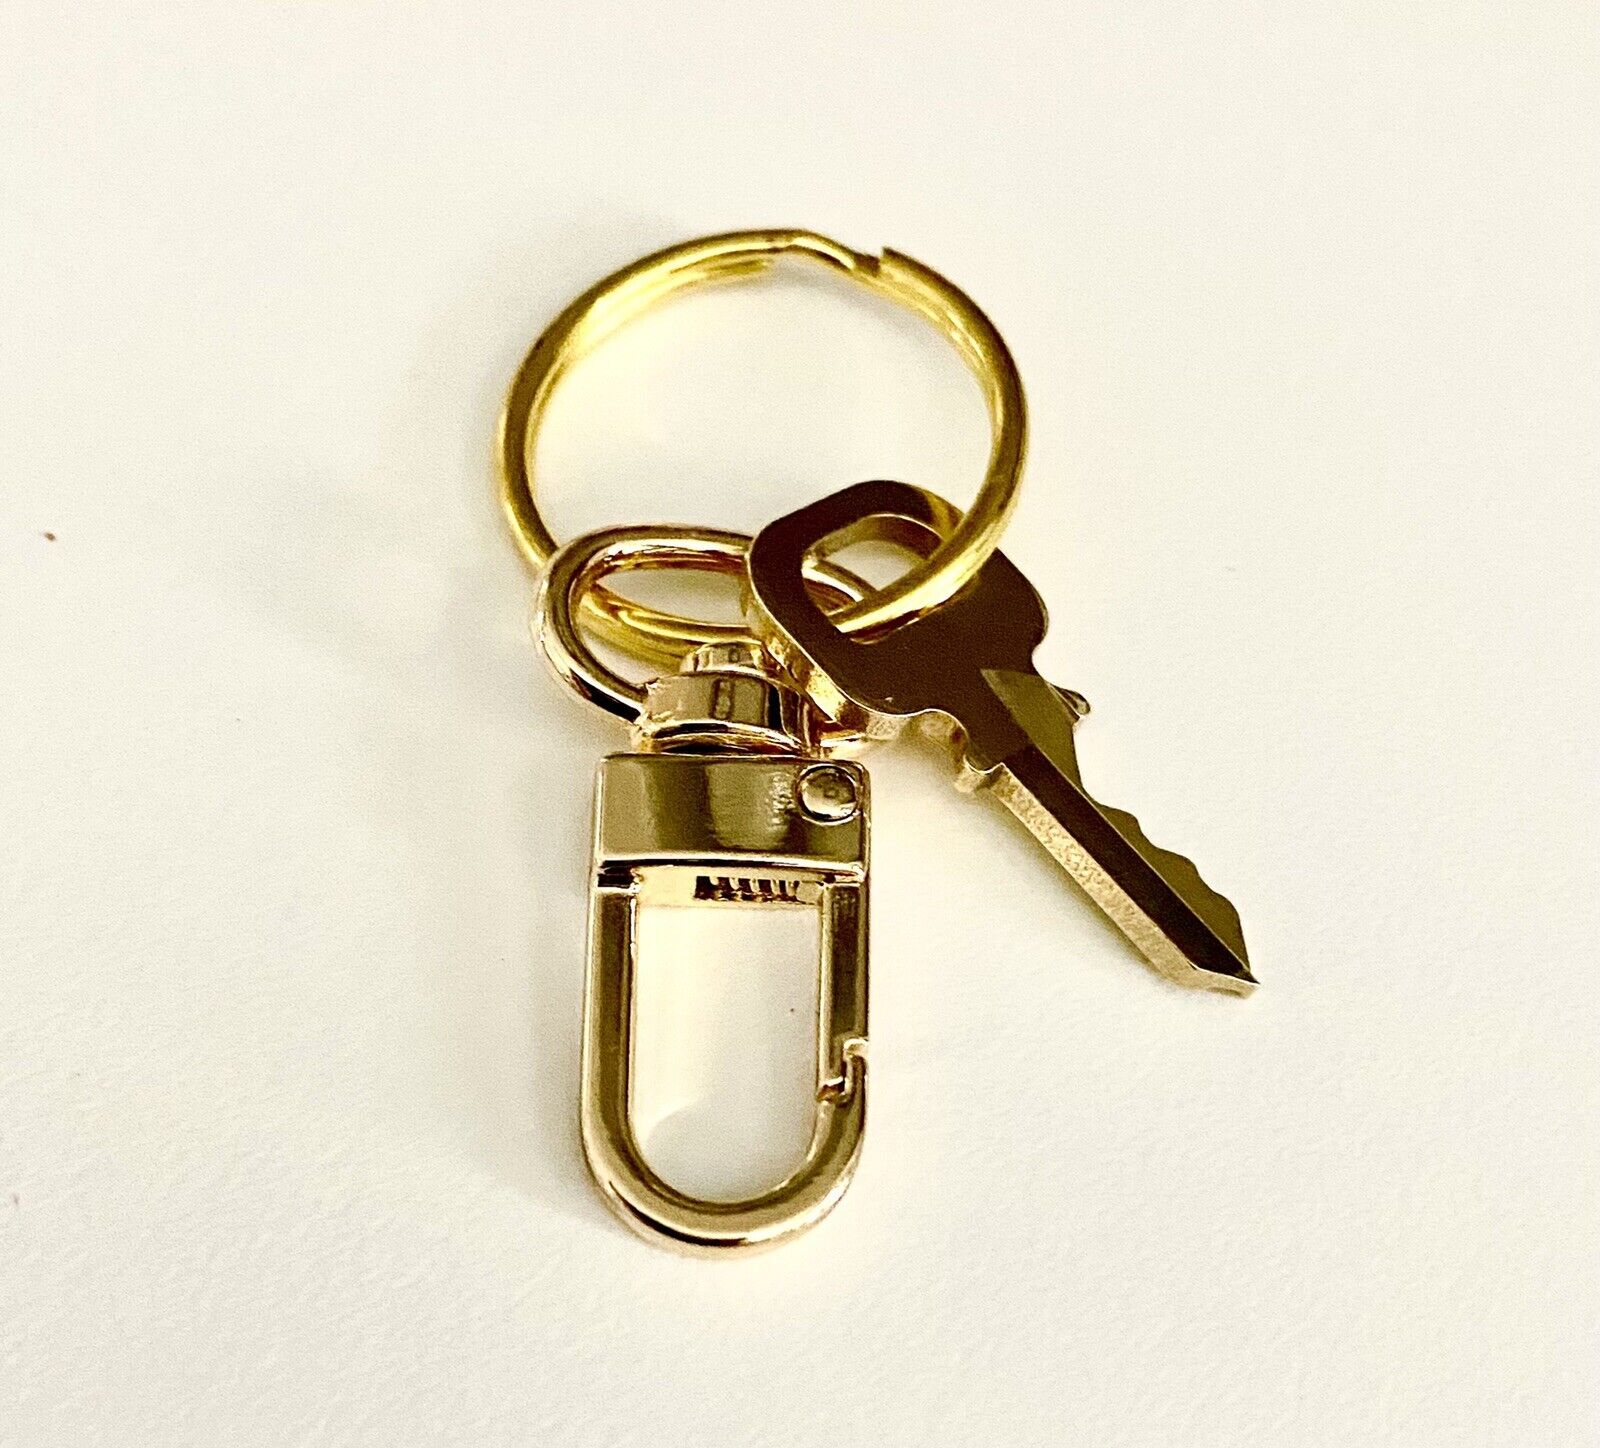 Louis Vuitton Key 342 Brass Goldtone Polished 100% Genuine -1 pc w/ Ring